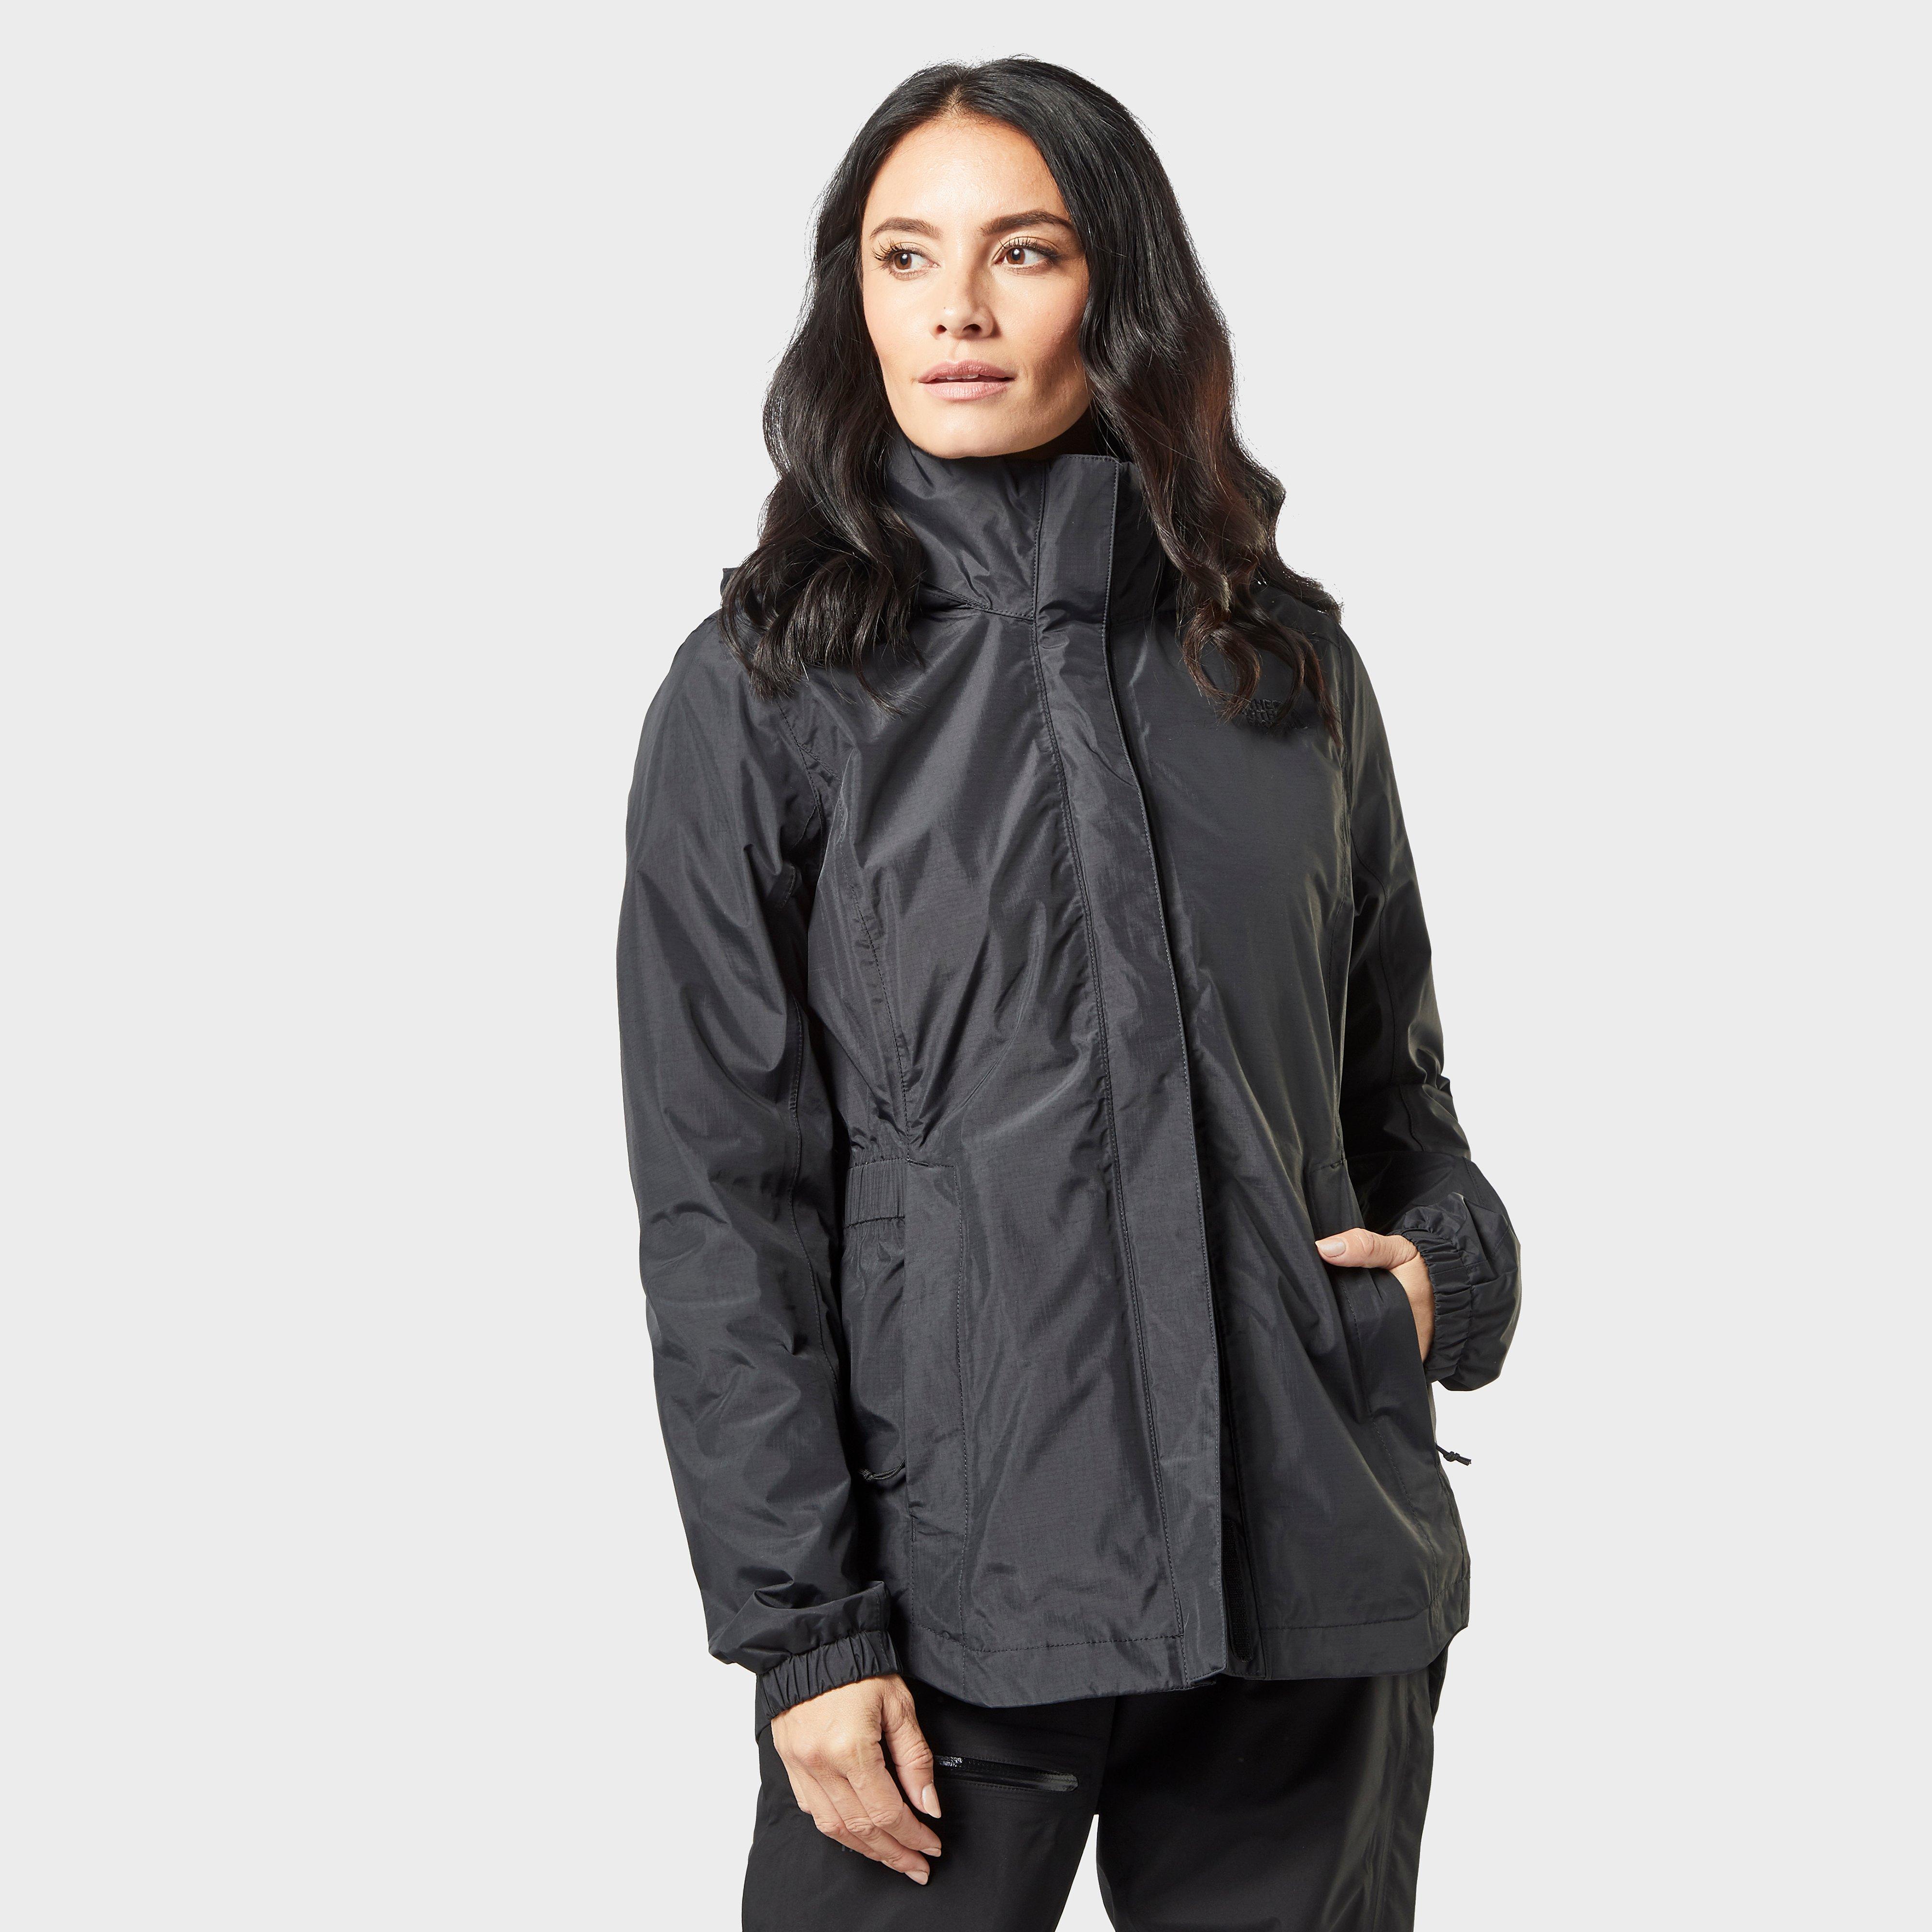 north face resolve jacket women's sale